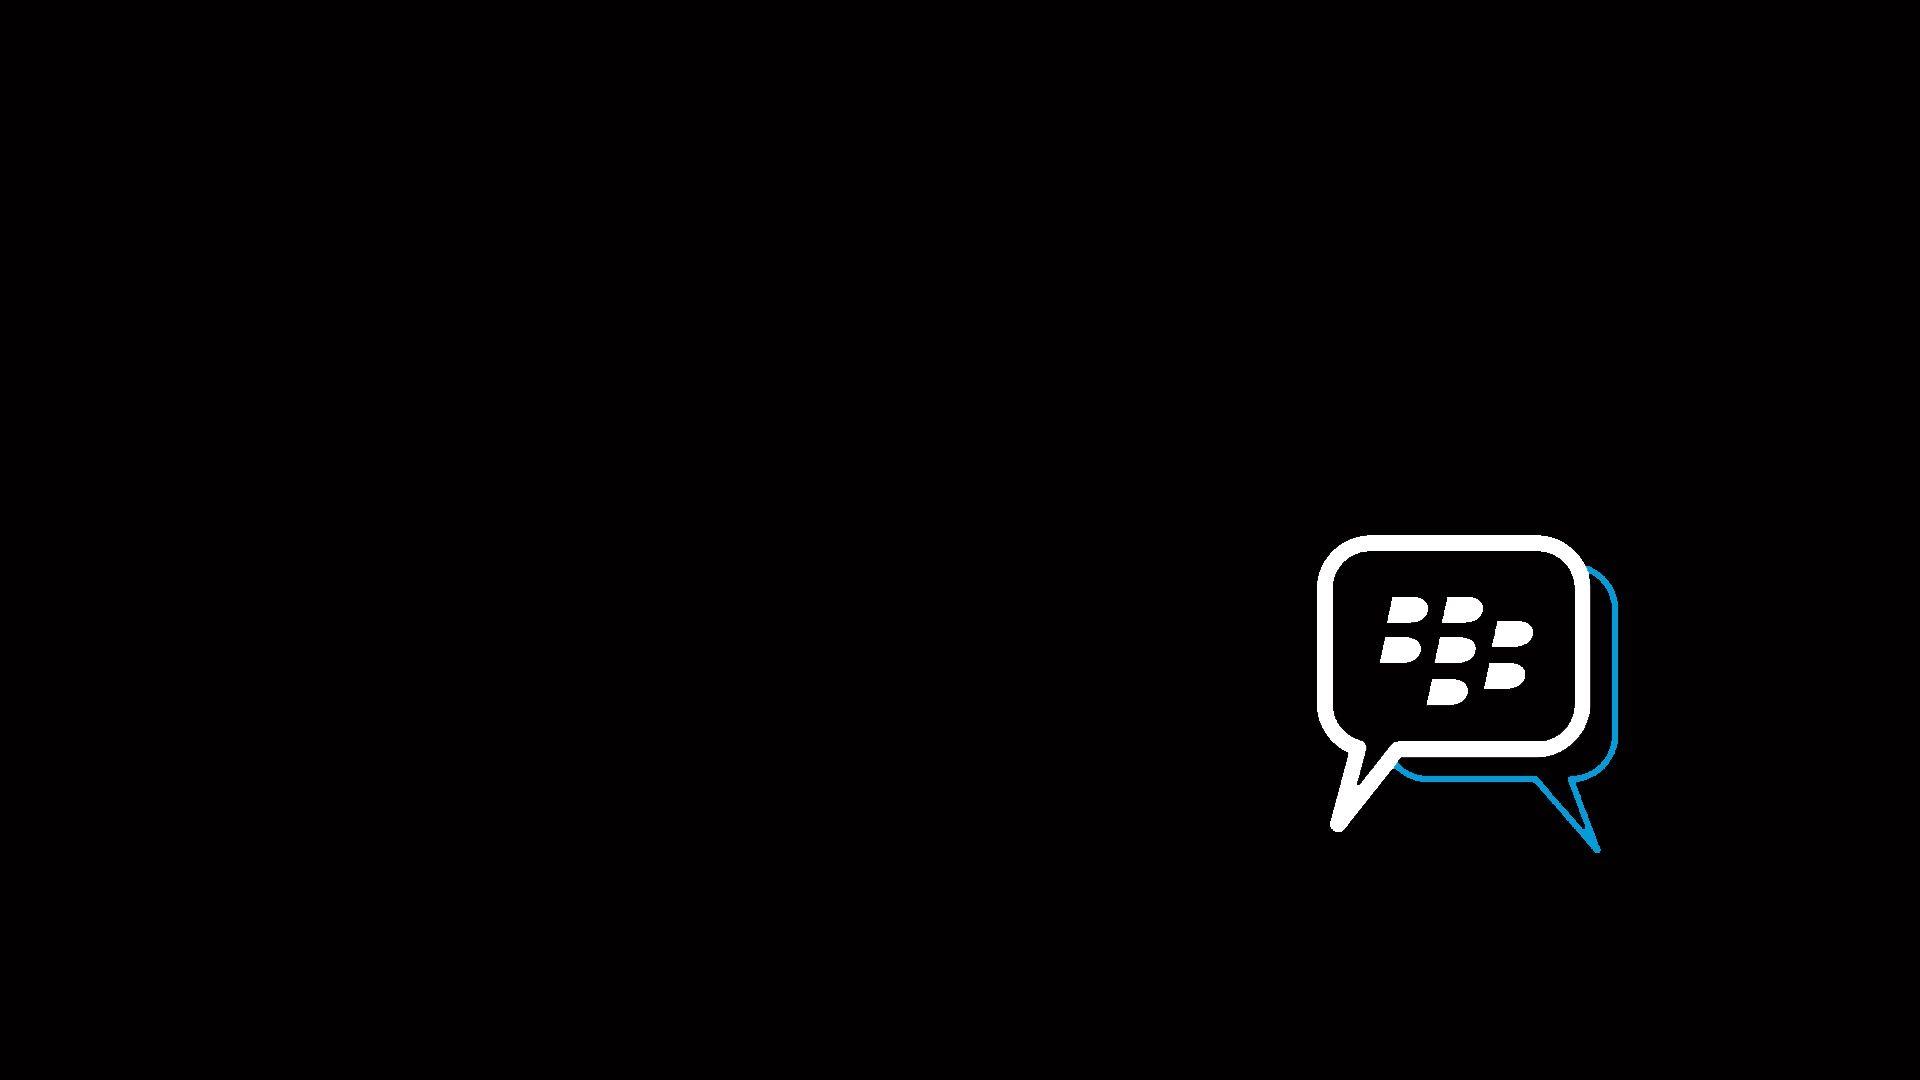 BlackBerry Logo Wallpaper 07 - [1920x1080]